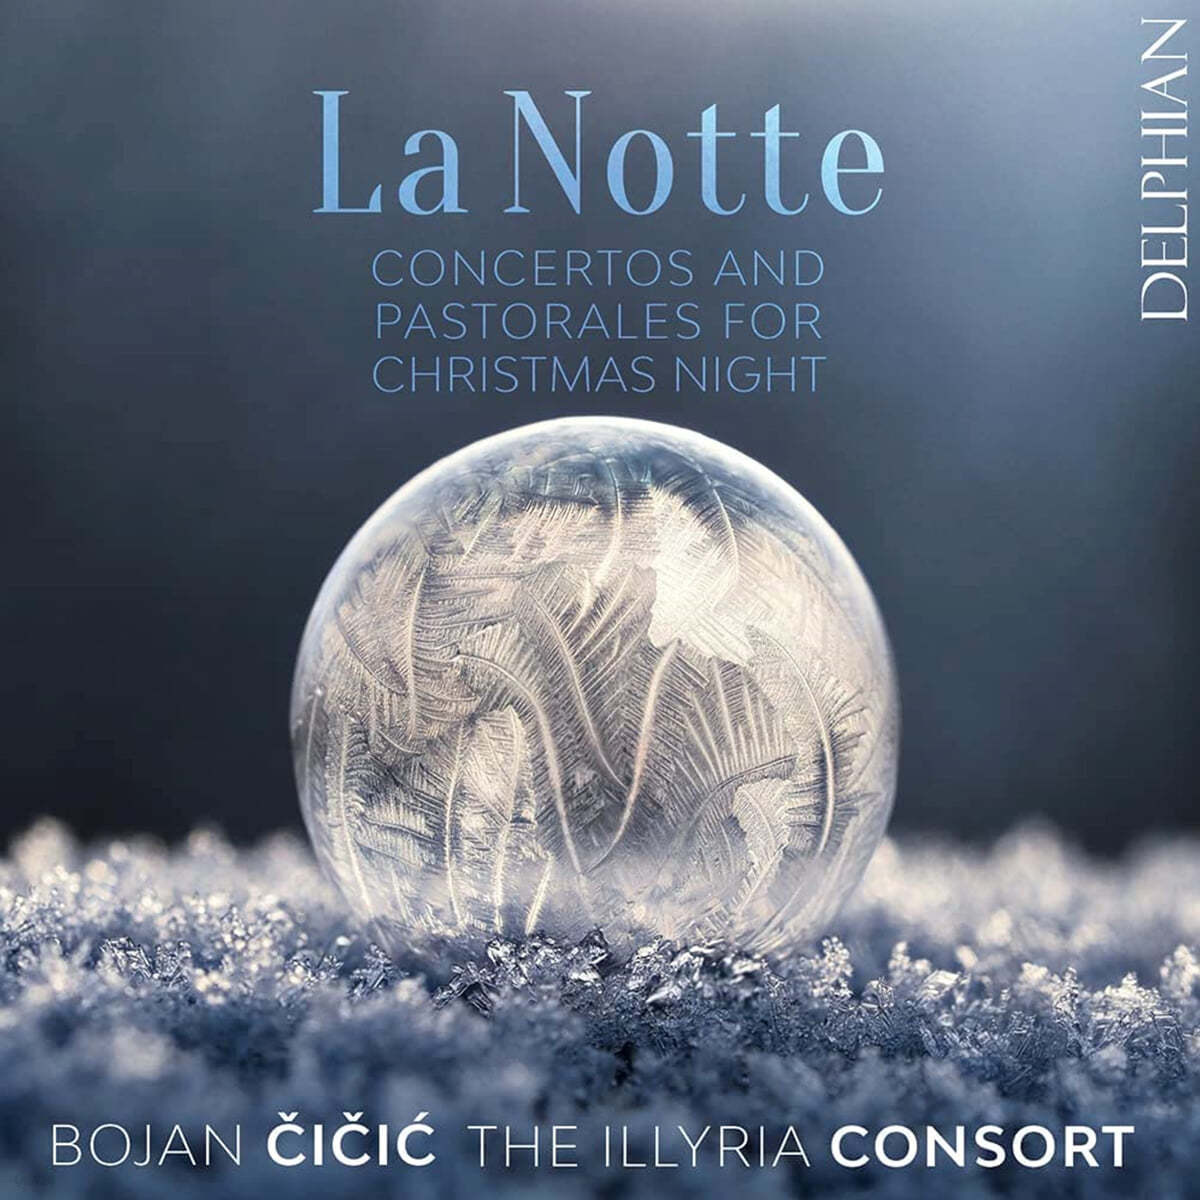 Bojan Cicic 크리스마스의 밤을 위한 협주곡과 목가 (‘La Notte’ - Concertos and Pastorales for Christmas Night)